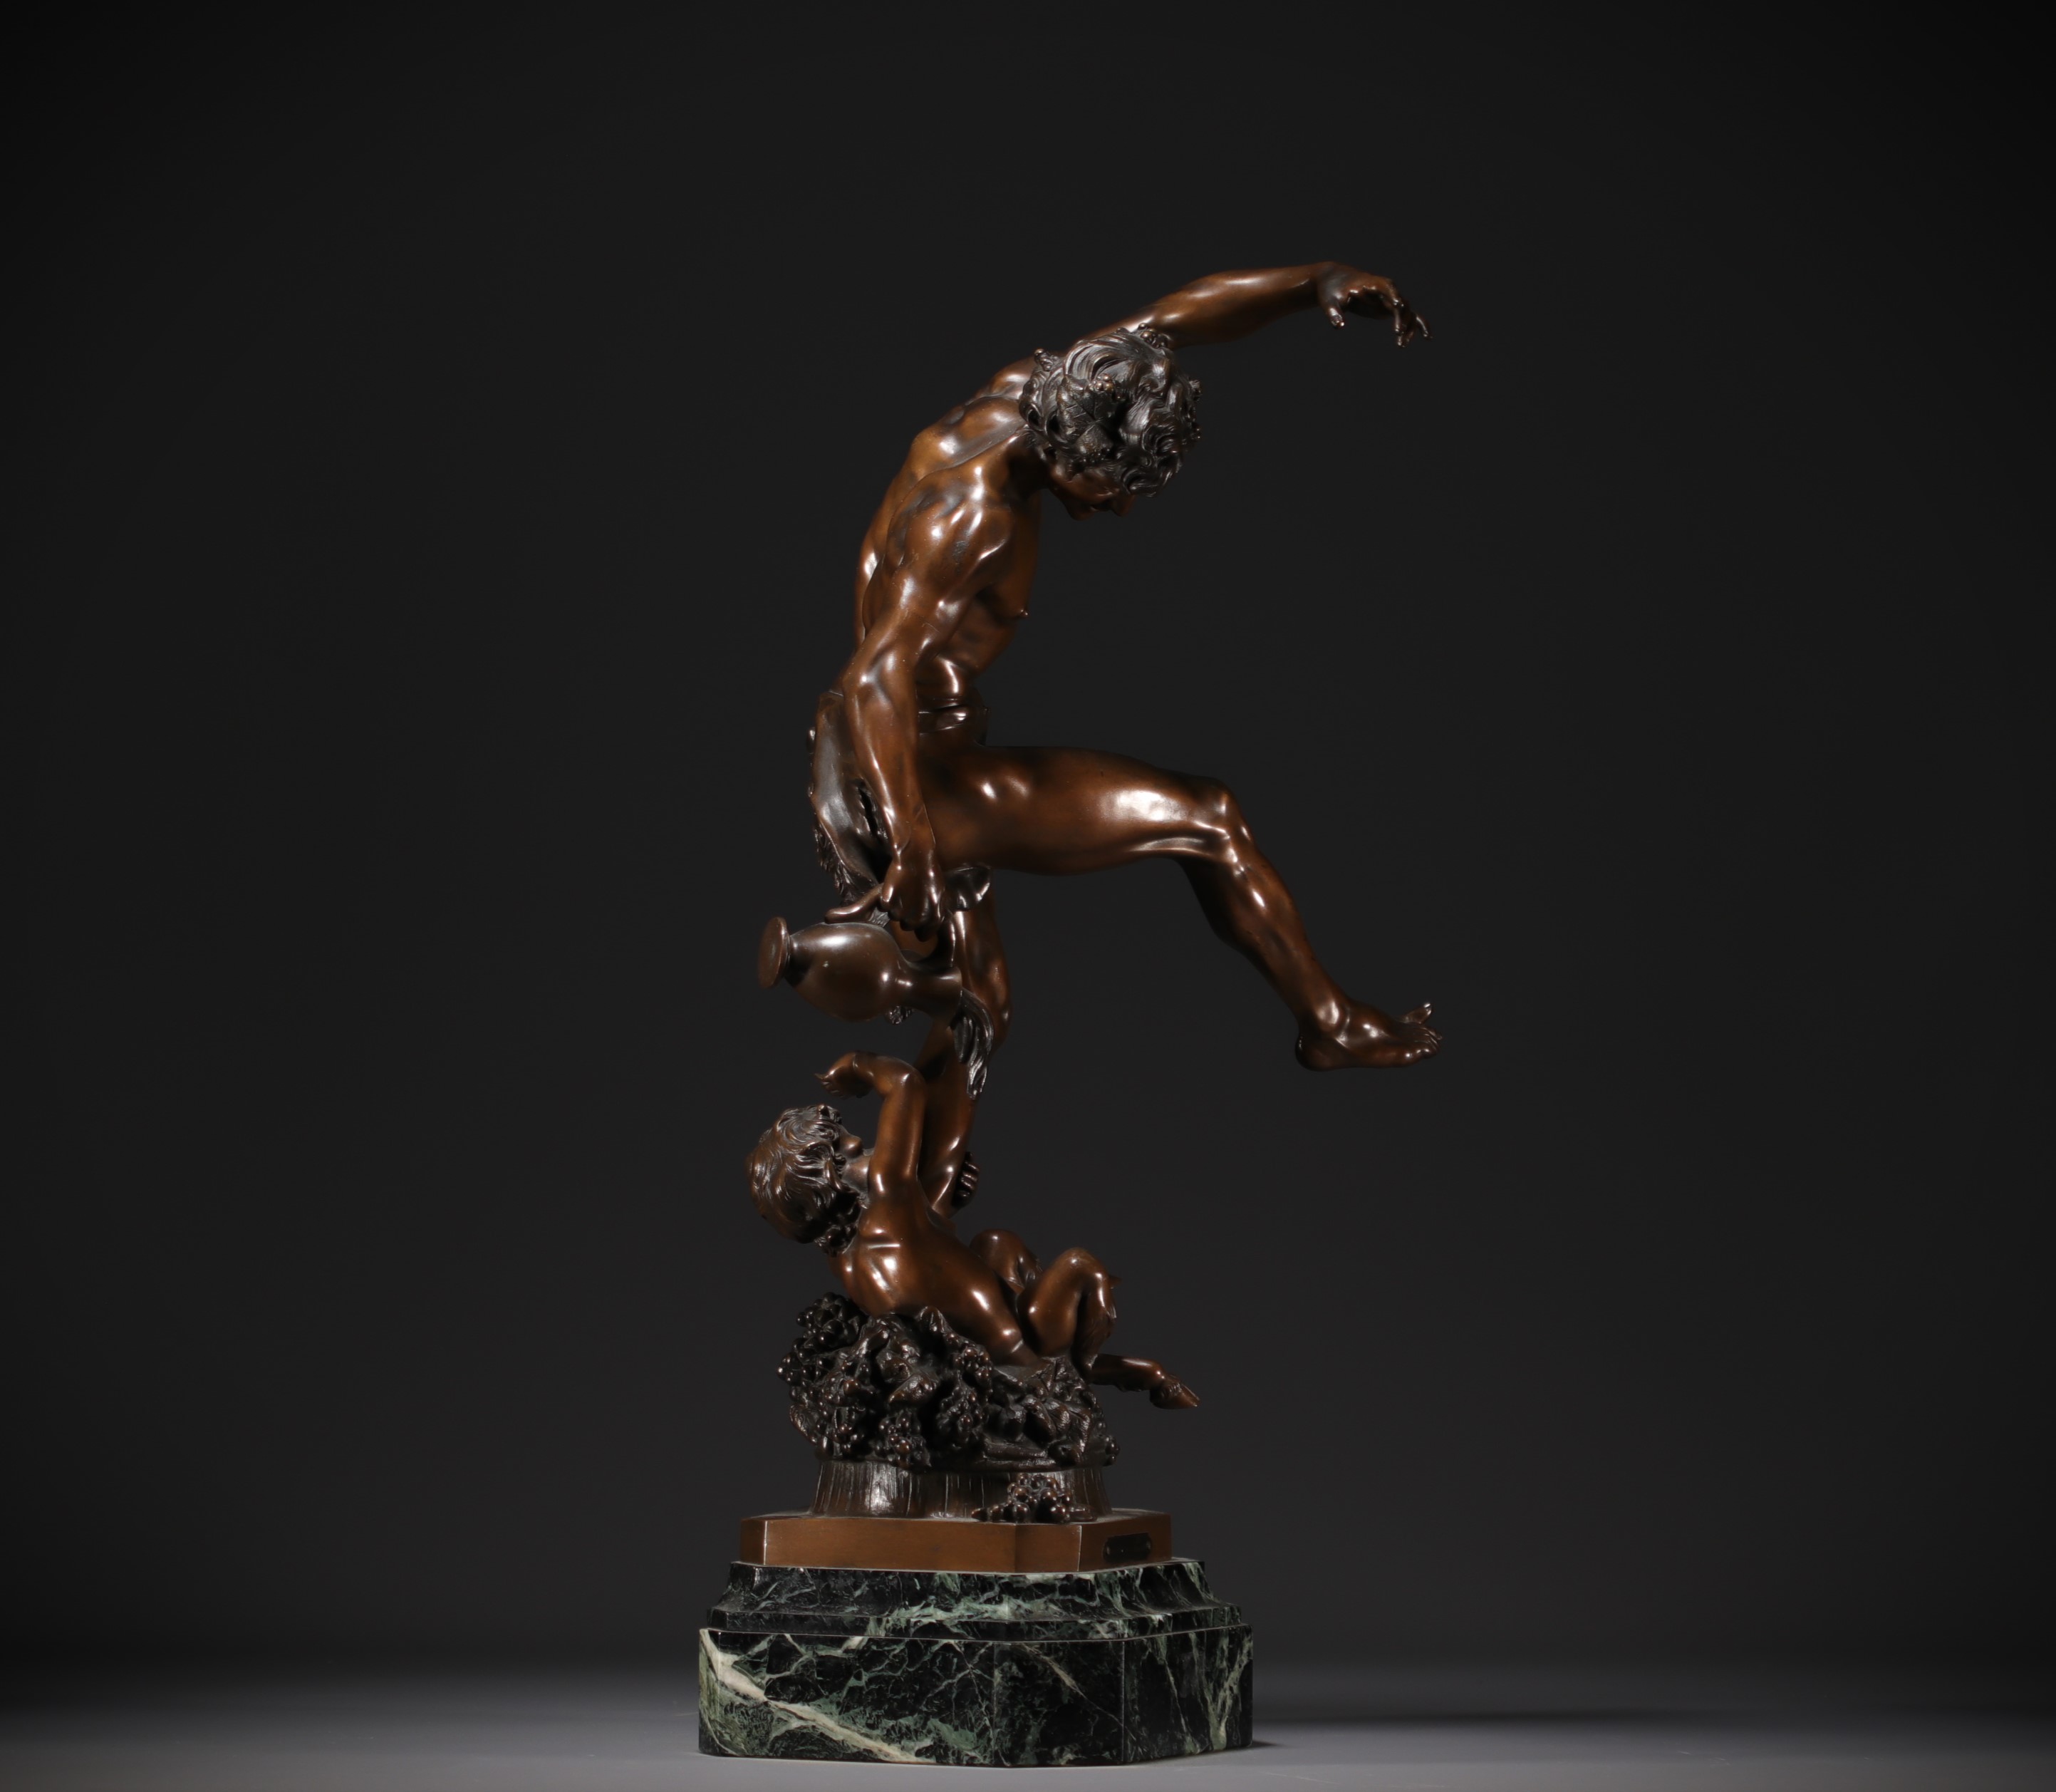 Louis HOLLWECK (1865-1935) "Le Vin" Large bronze sculpture on marble base. - Image 4 of 7